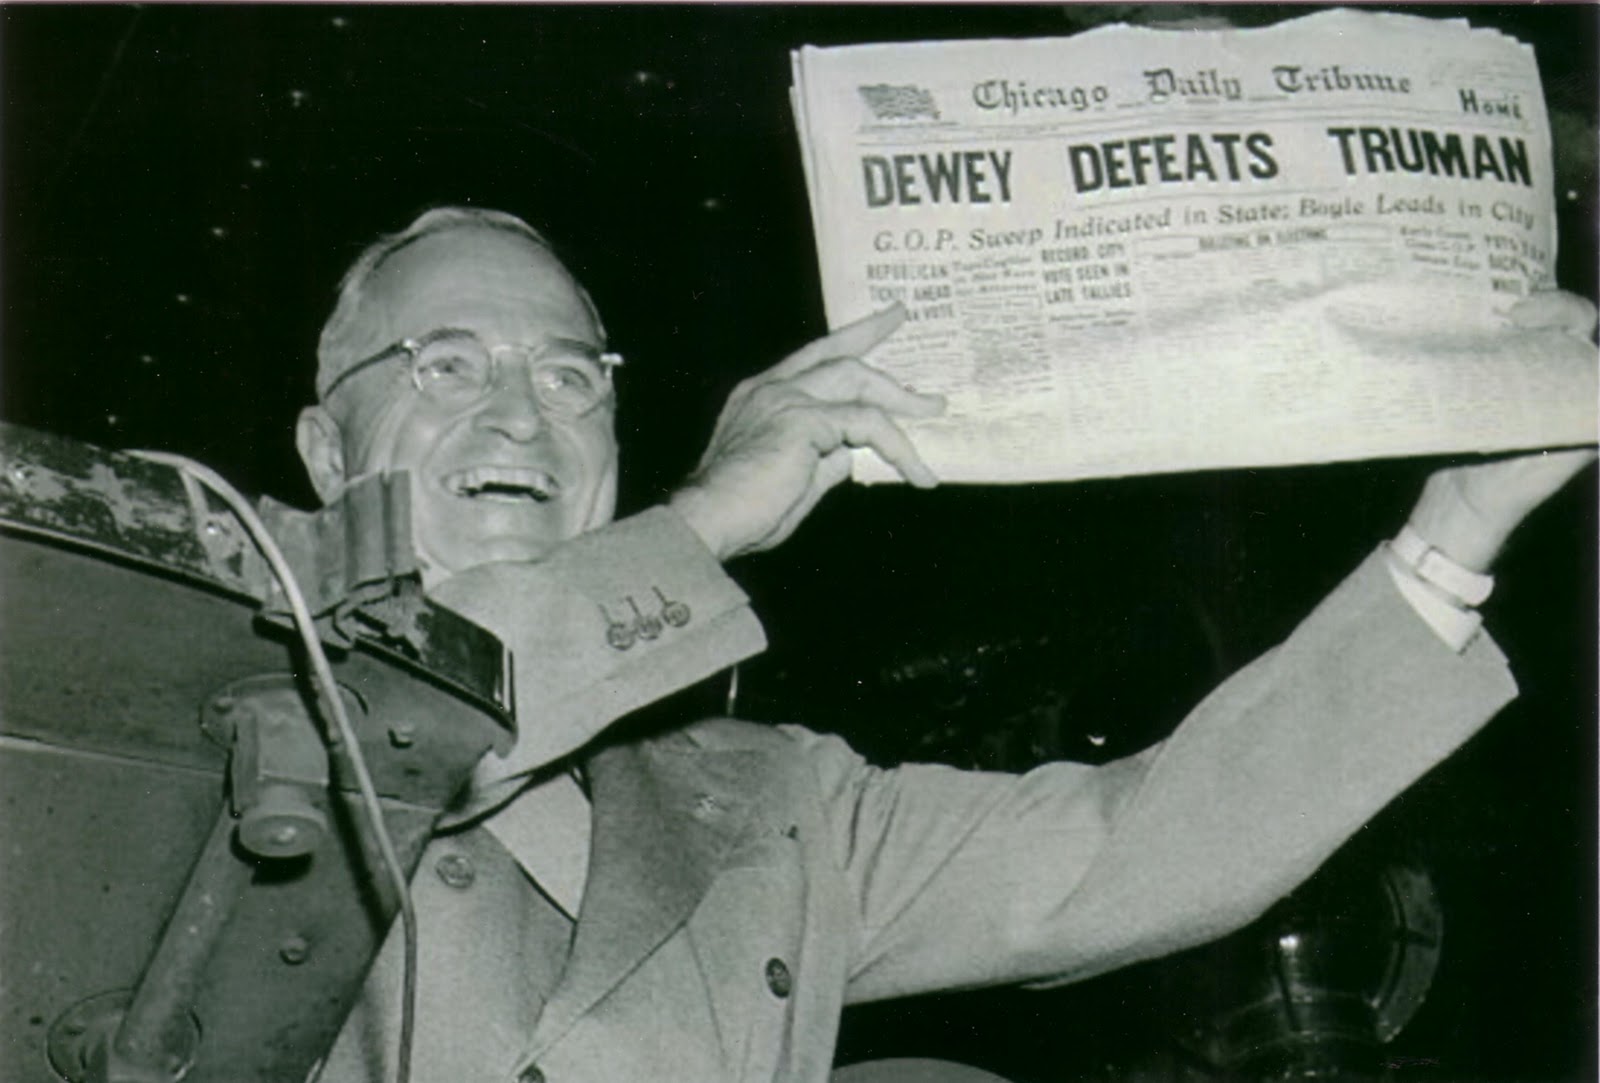 Dewey Defeats Truman Headline